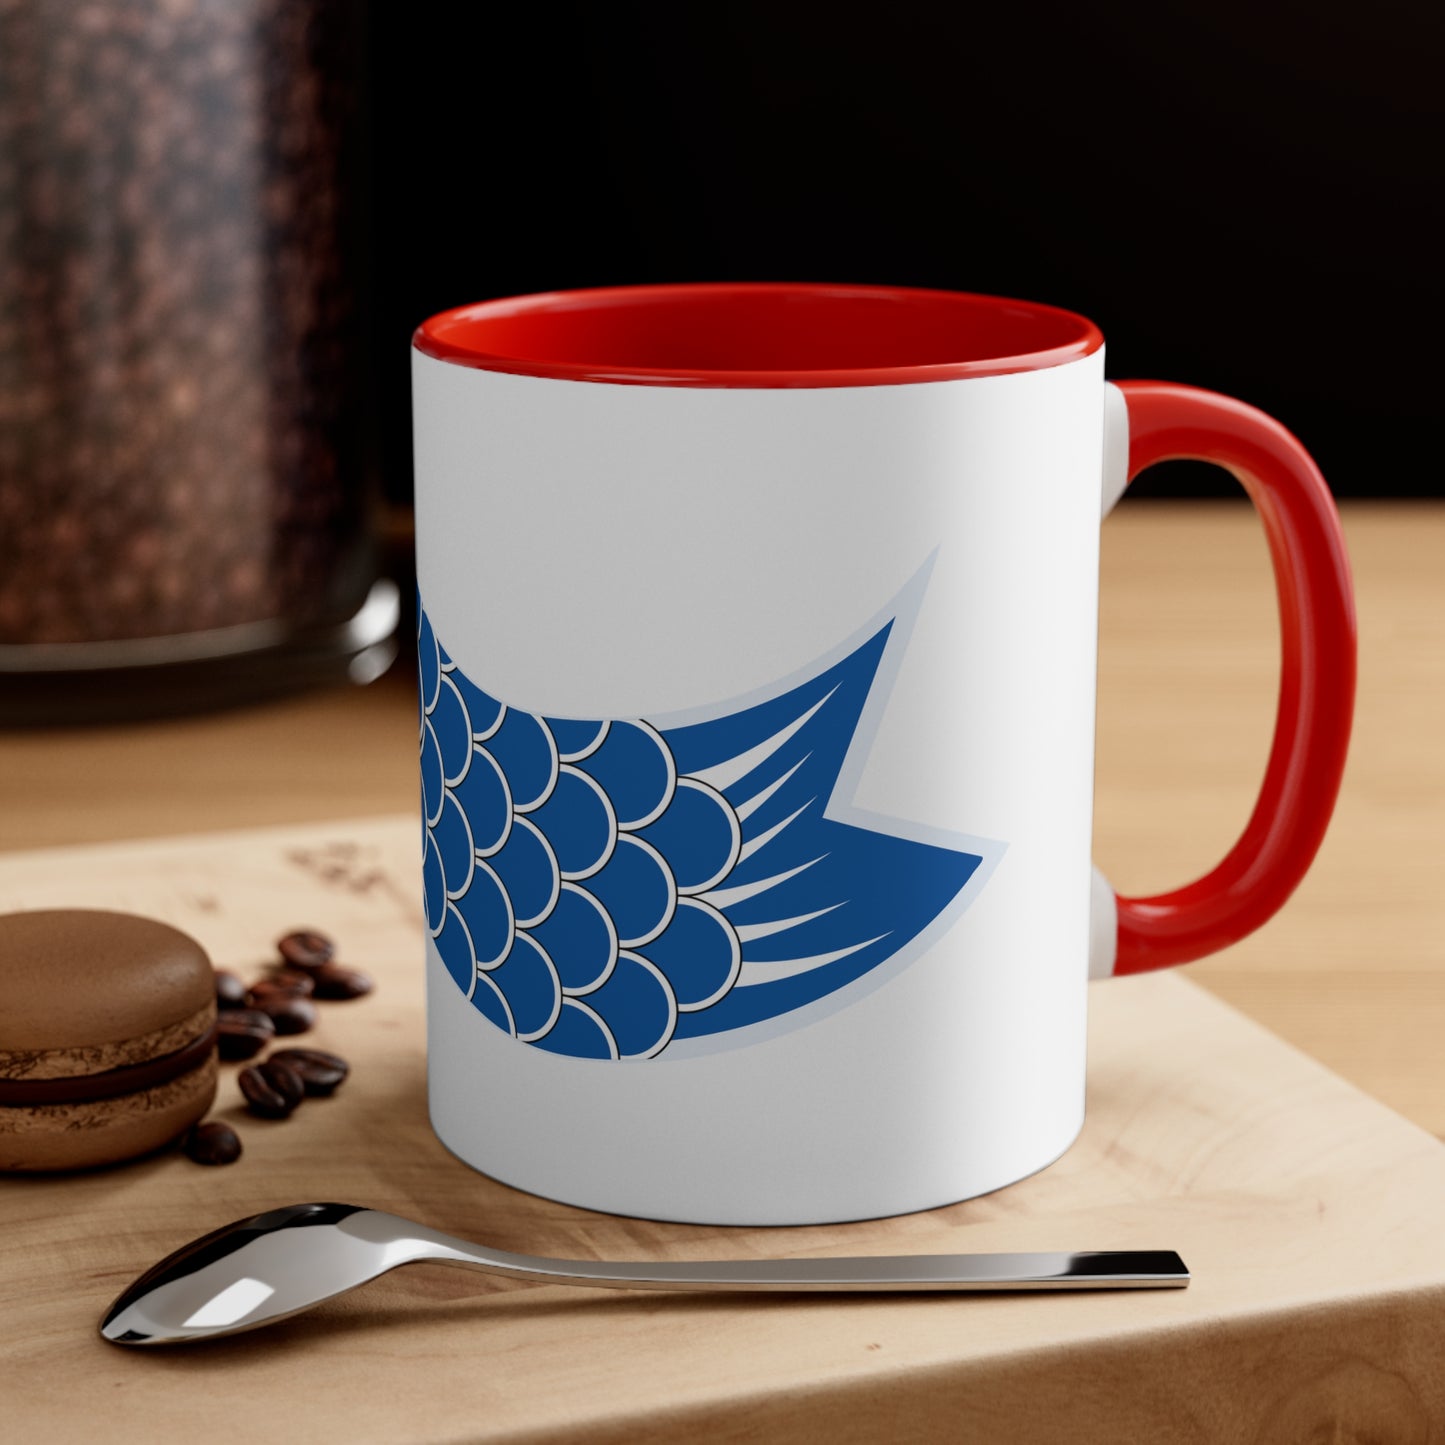 Blue Koinobori (Carp Streamer) Accent Coffee Mug, 11oz